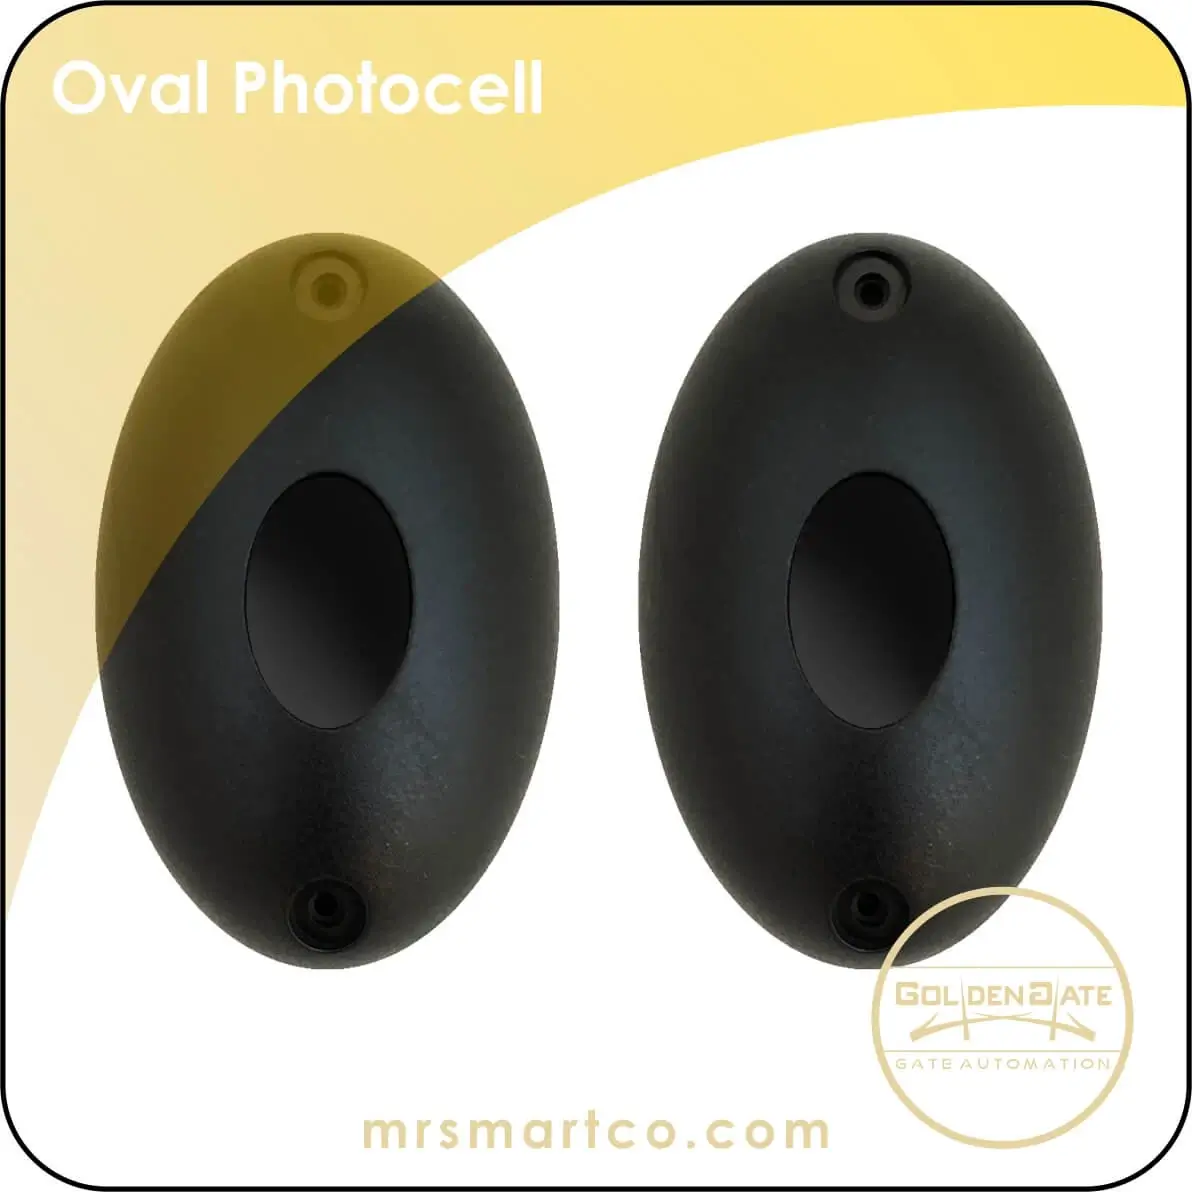 Oval Photocell